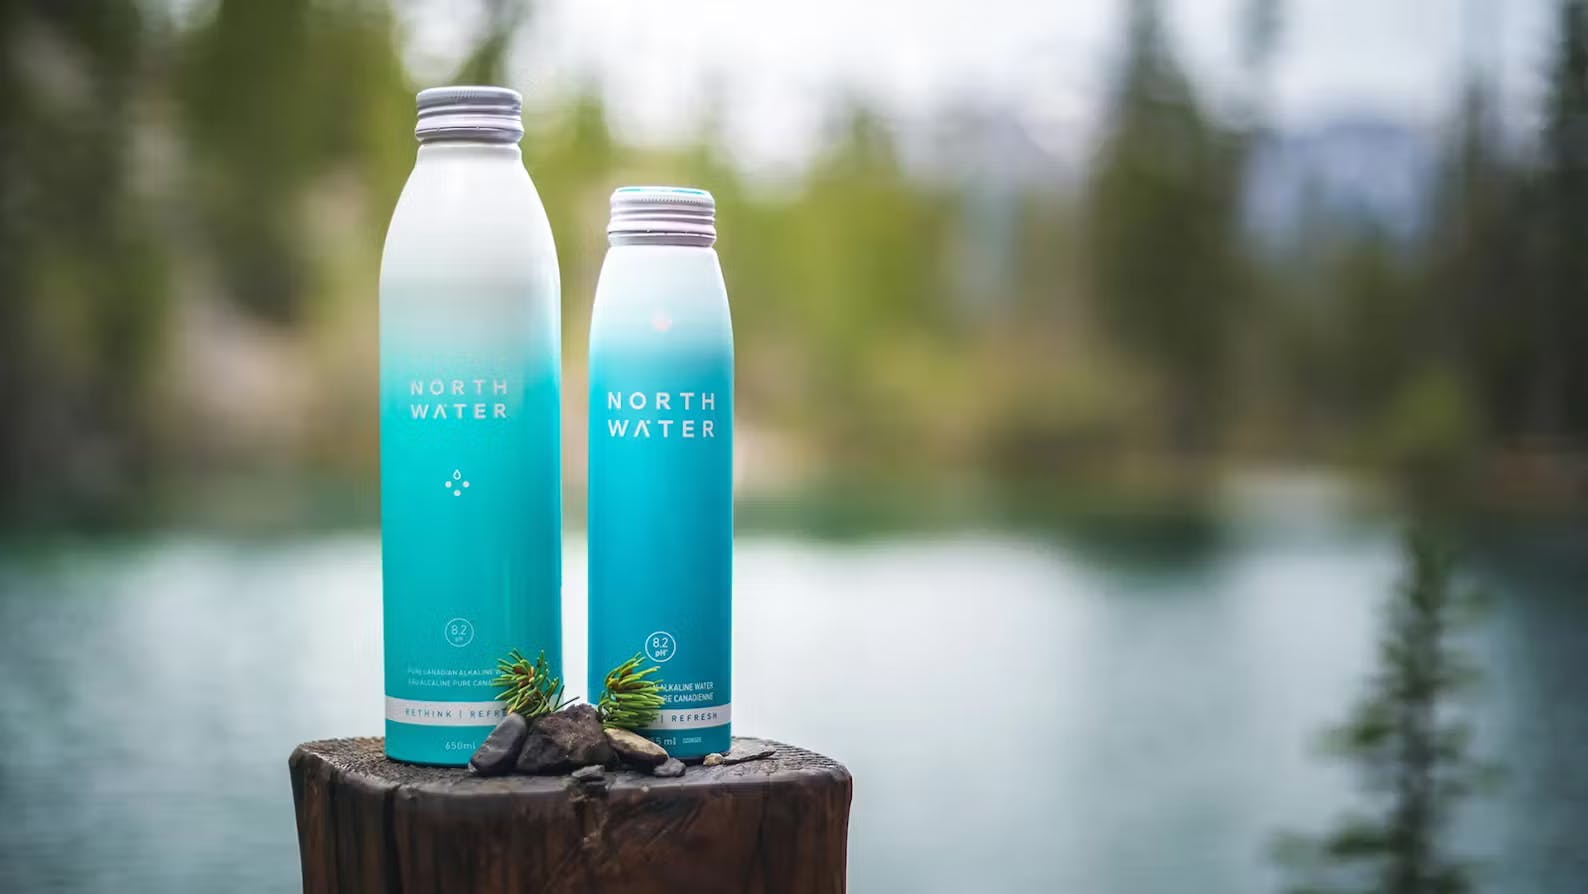 North Water bottles